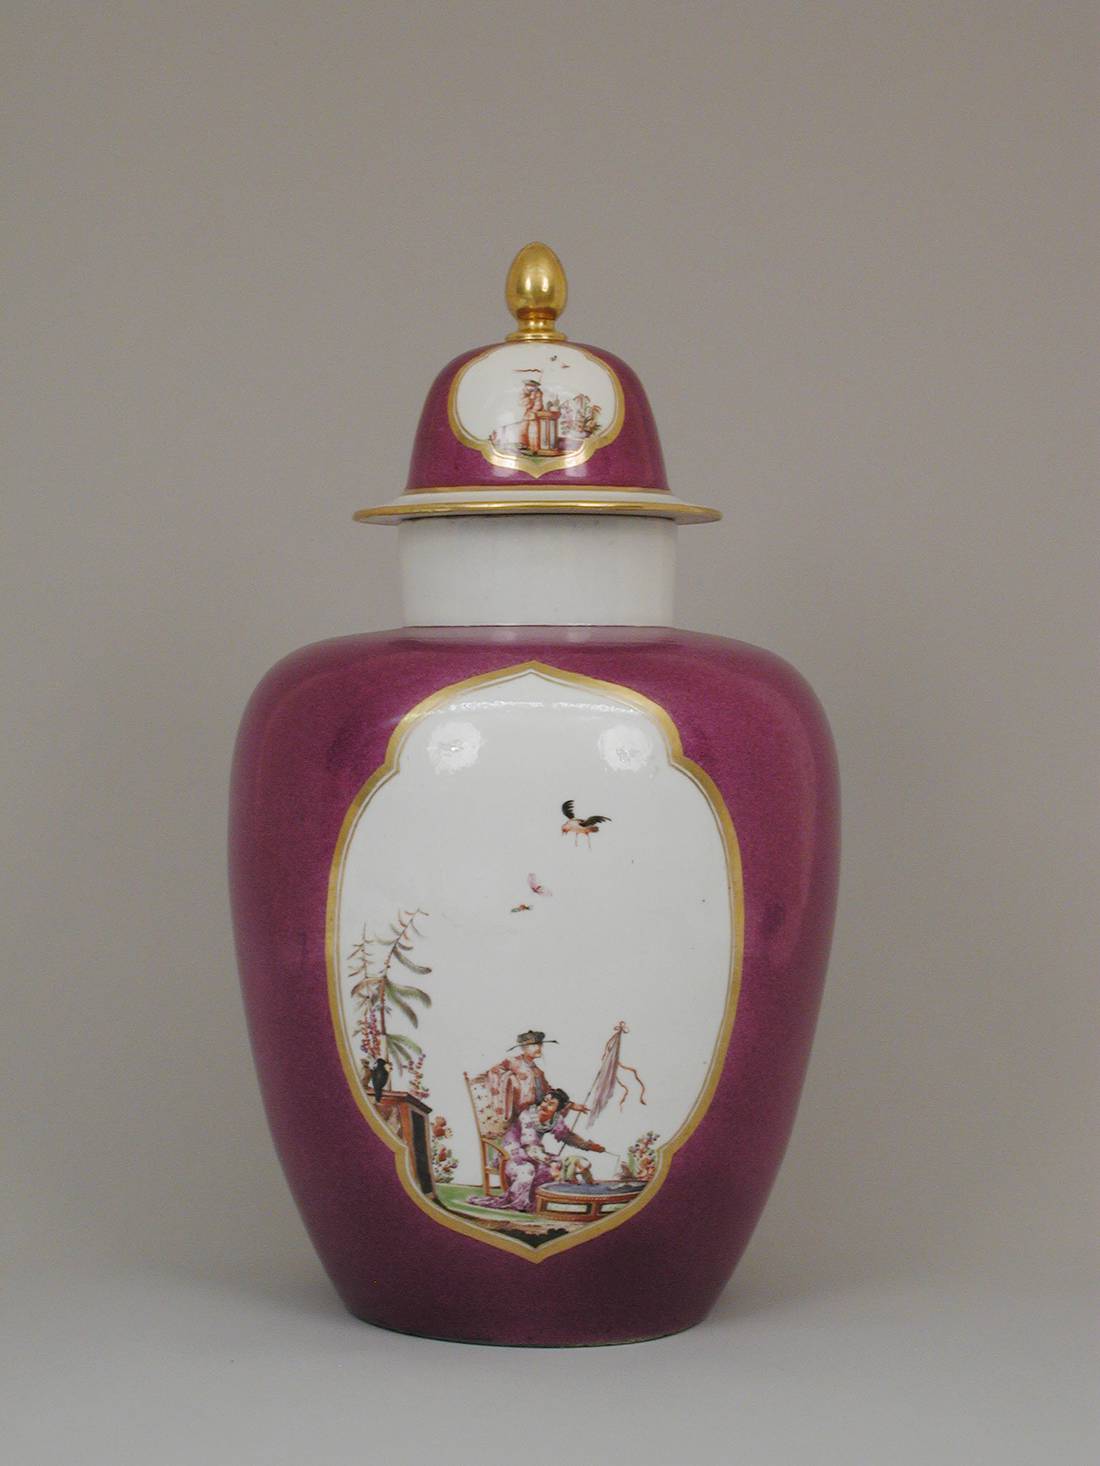 Fig. 13: Vase with cover, Meissen Porcelain Manufactory, c. 1730.